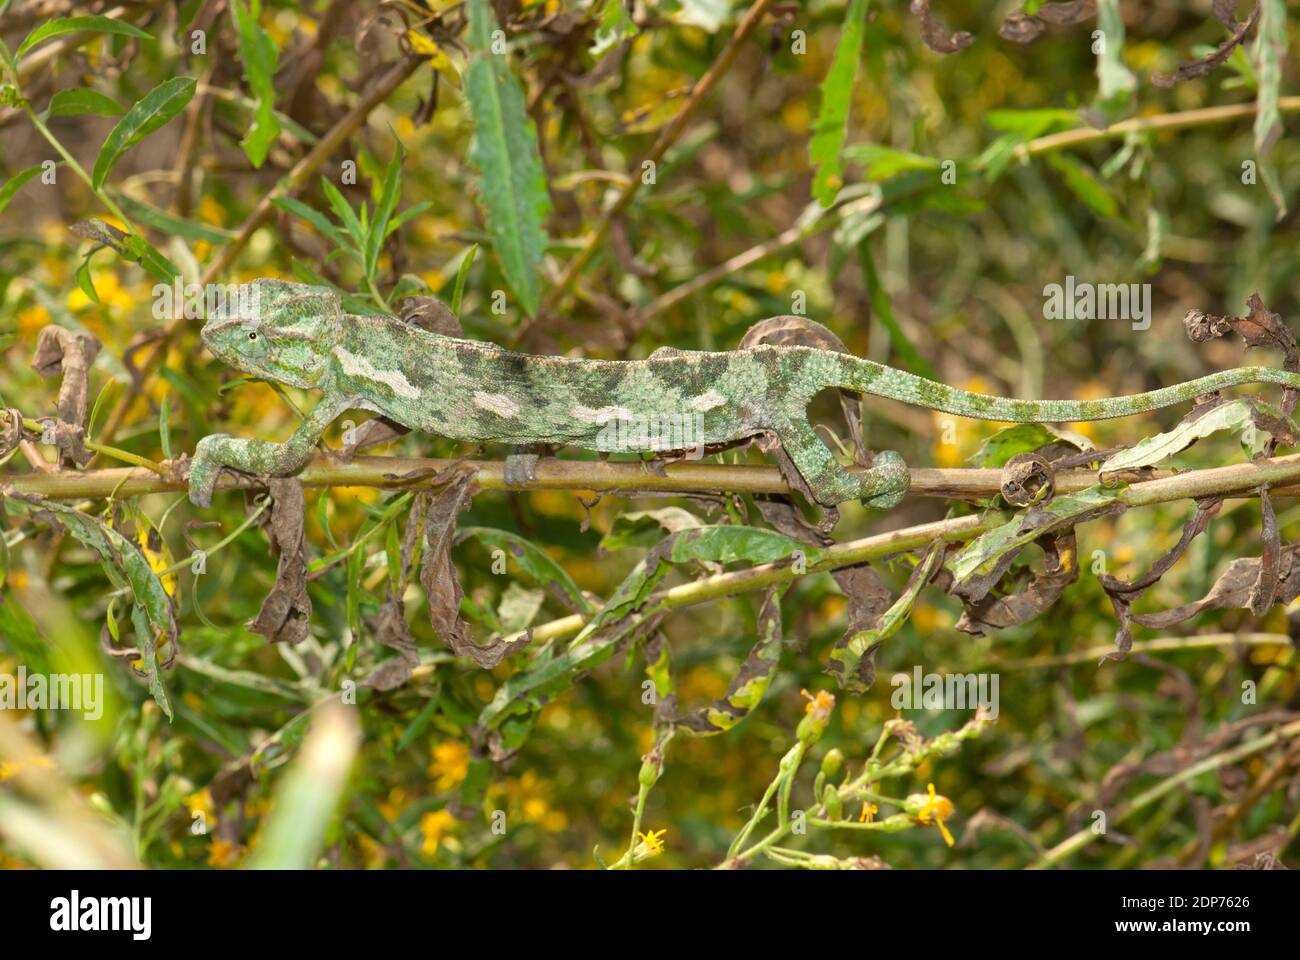 Chameleon camouflage Stock Photo